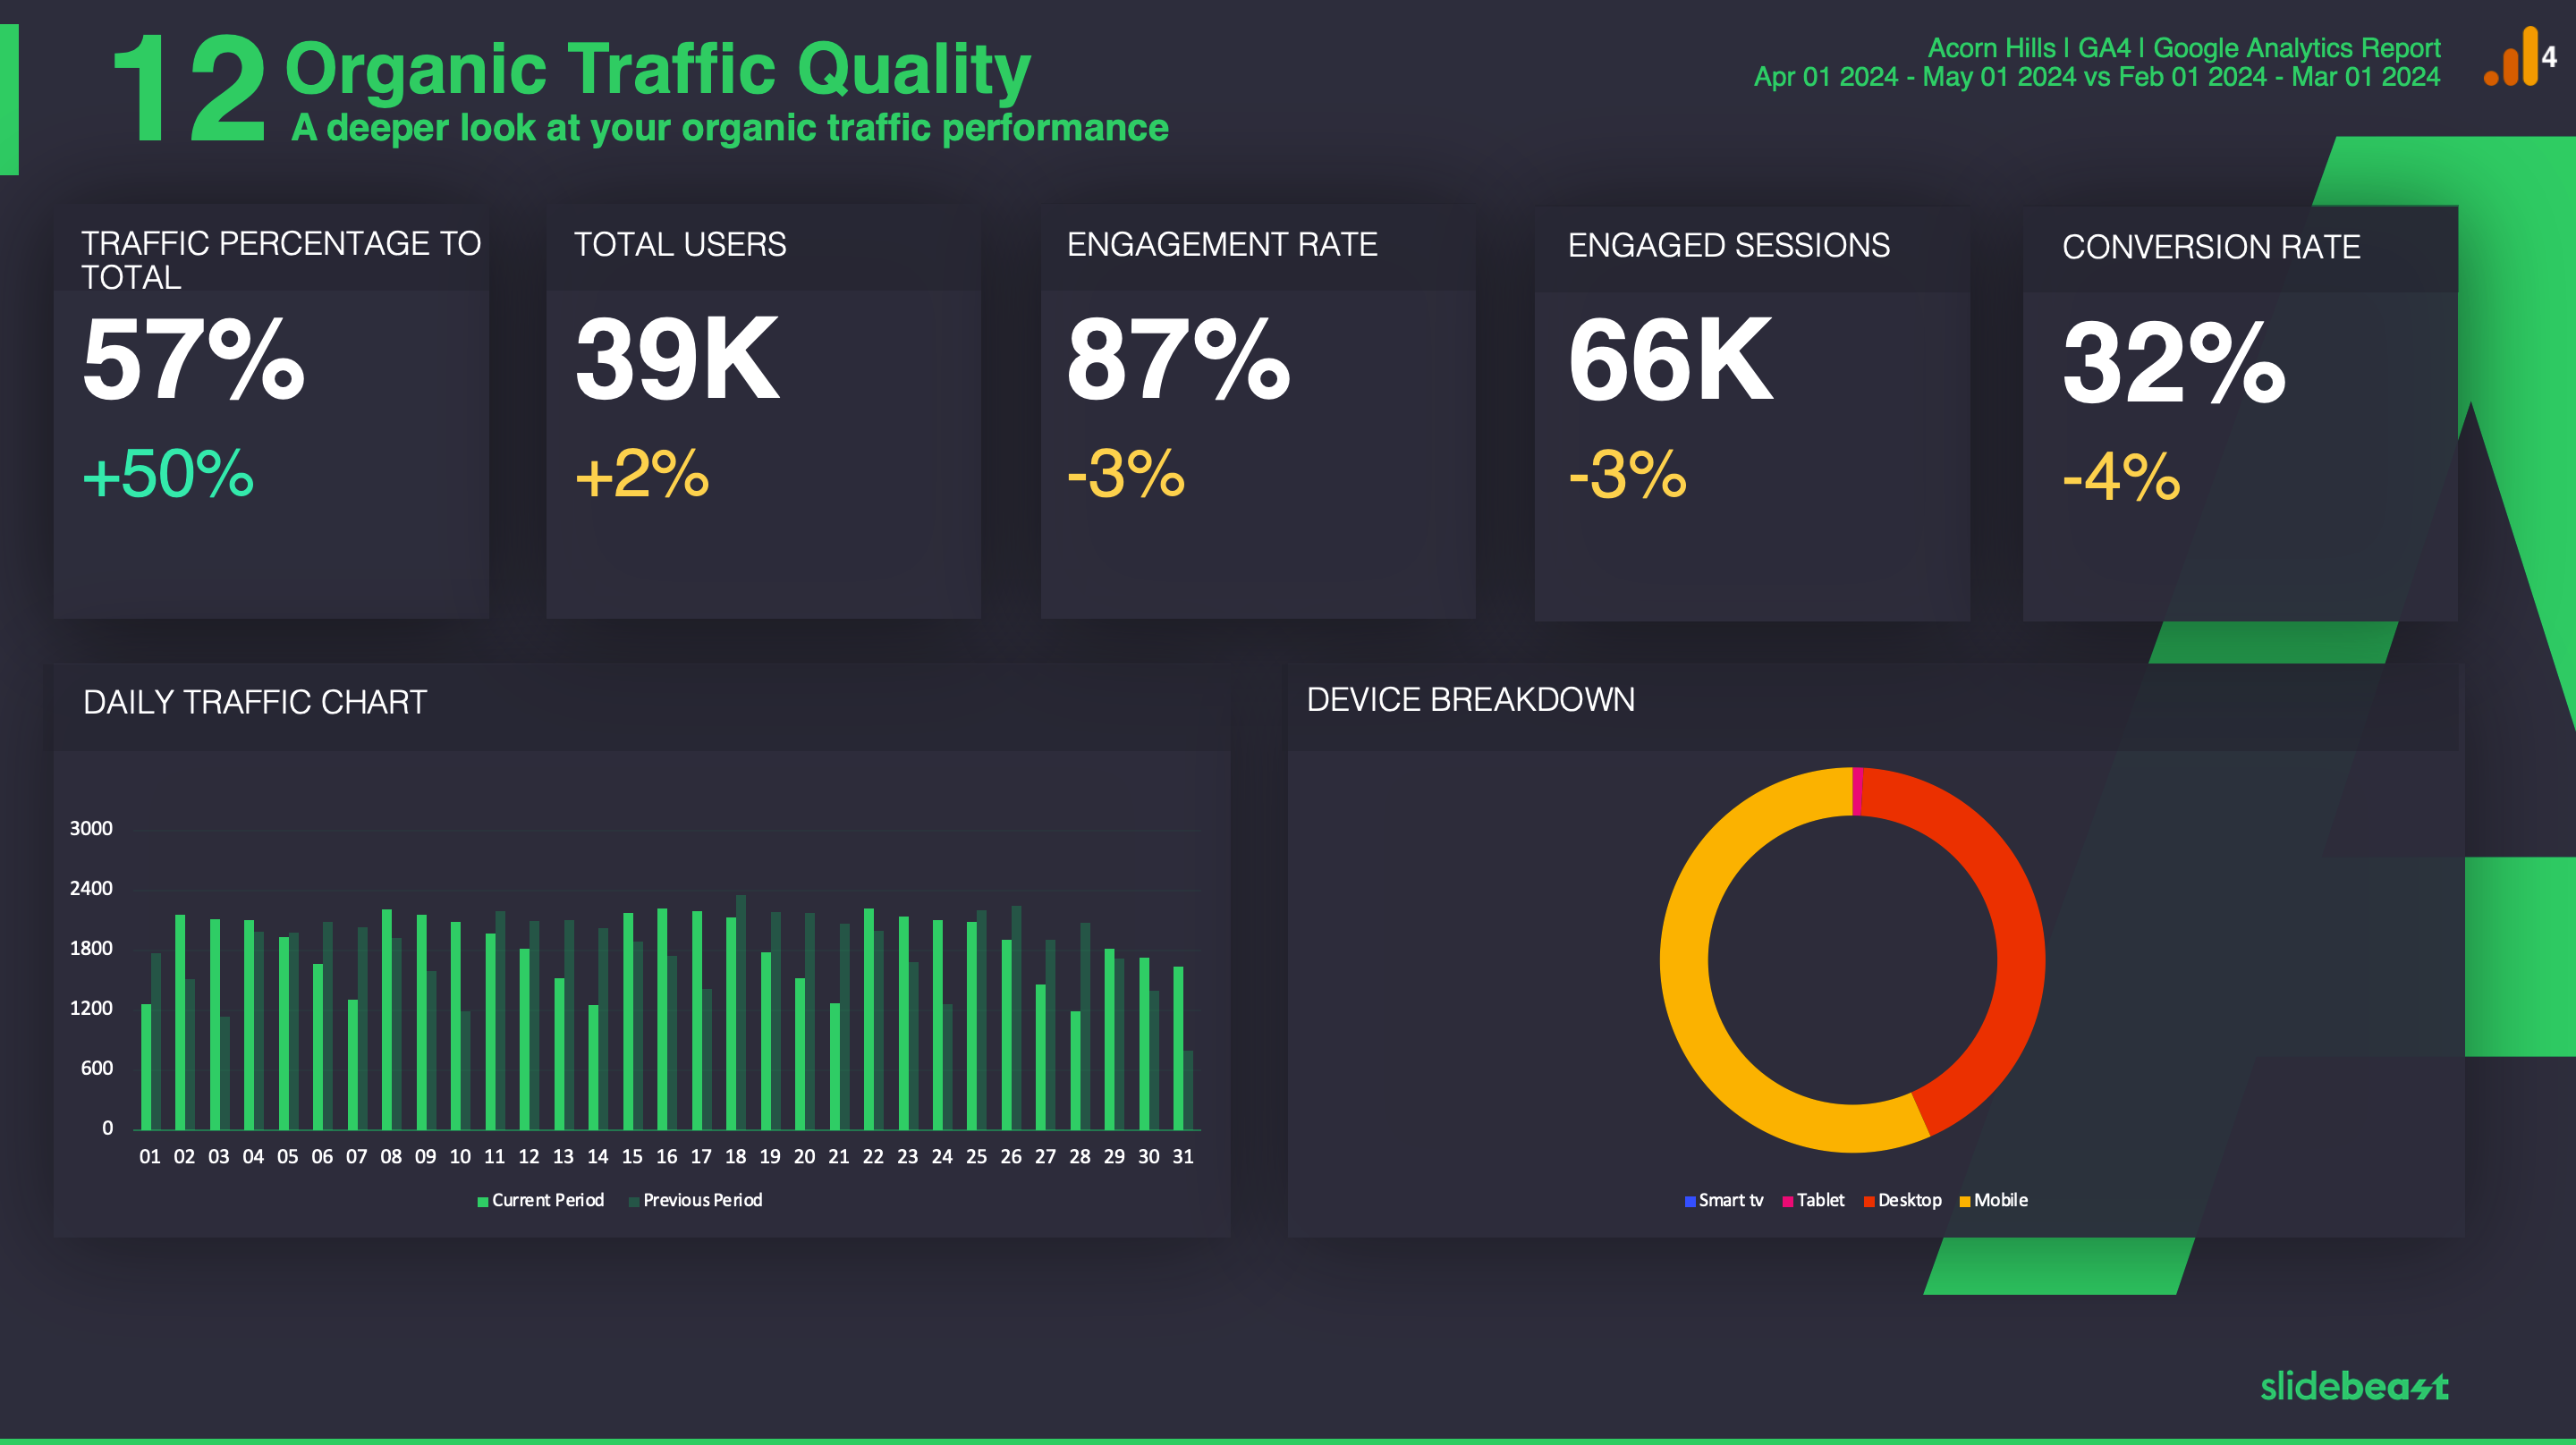 Google Analytics 4 Organic Traffic Report Template 2